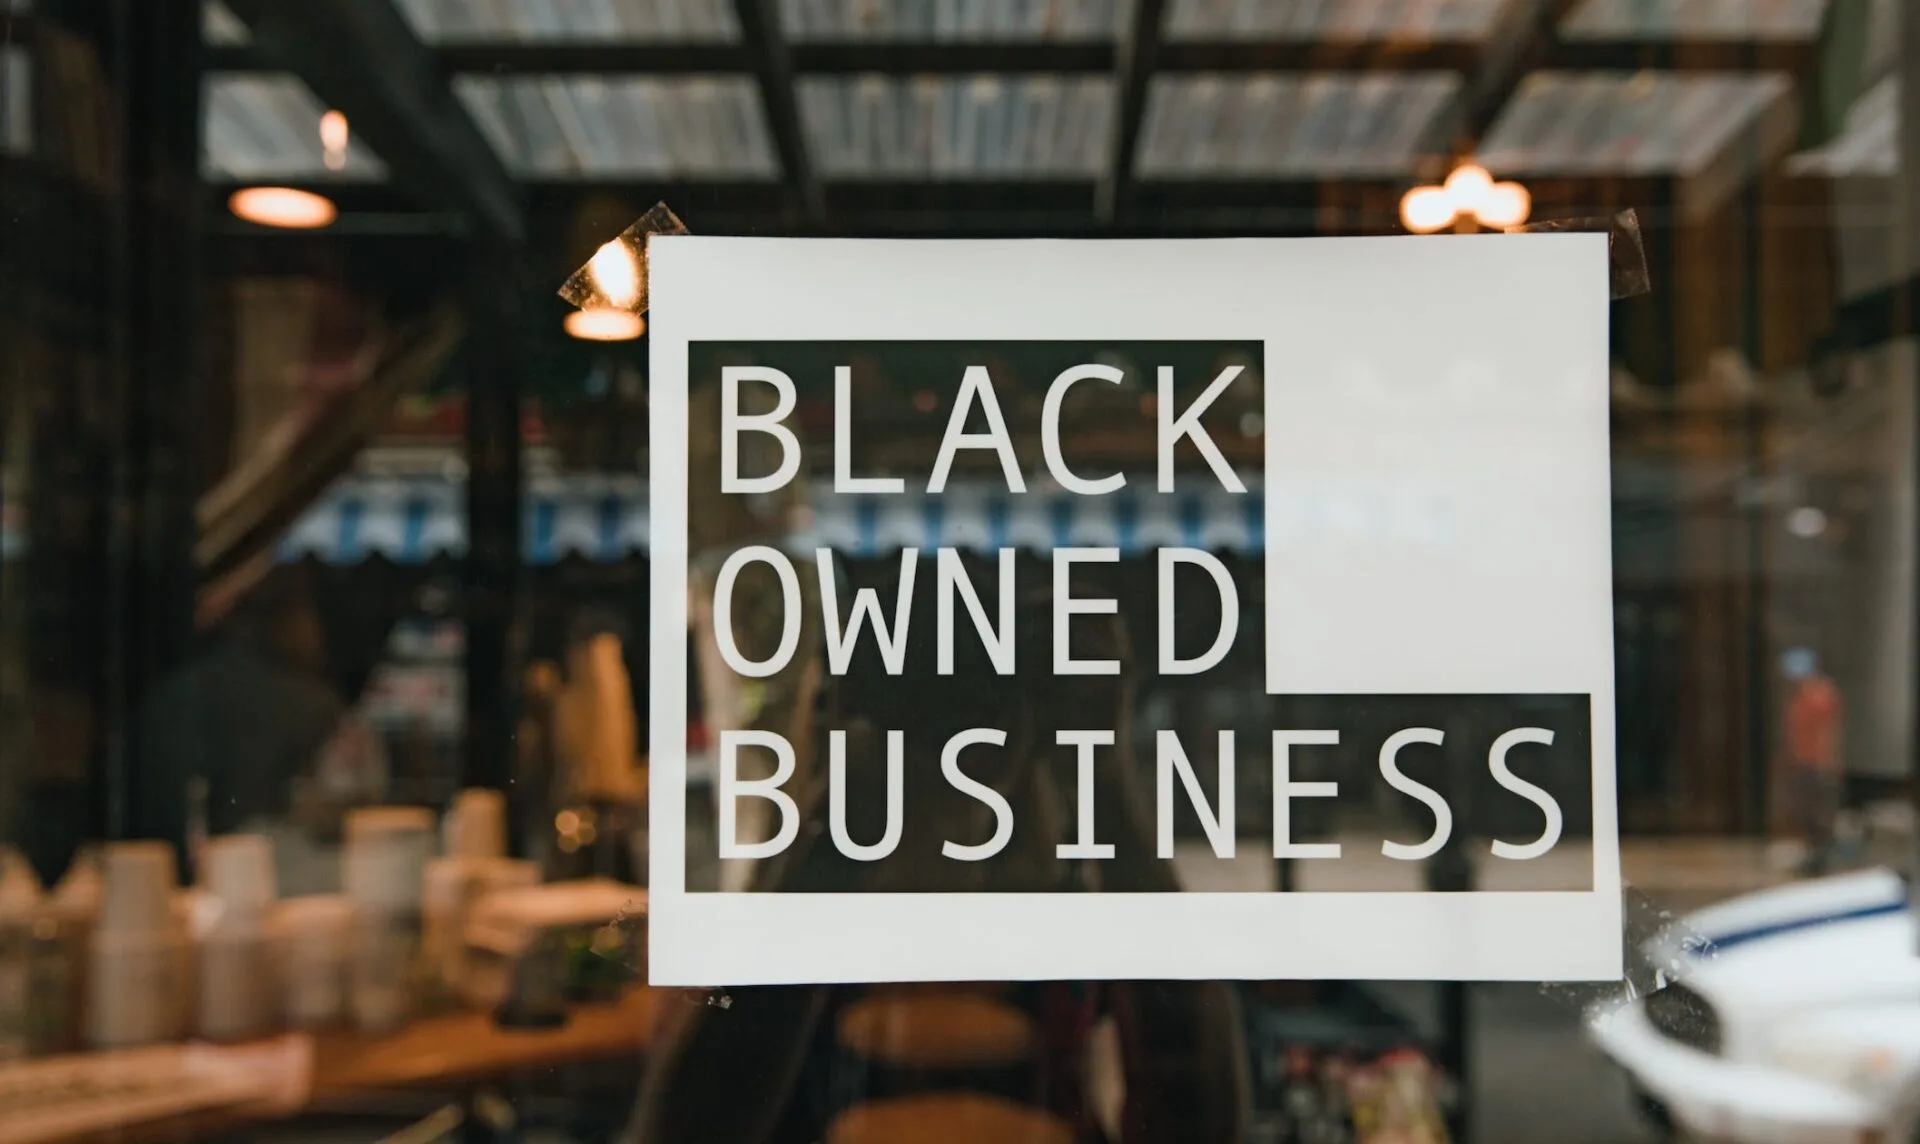 Black Owned Business, Oakland, Atlantic city